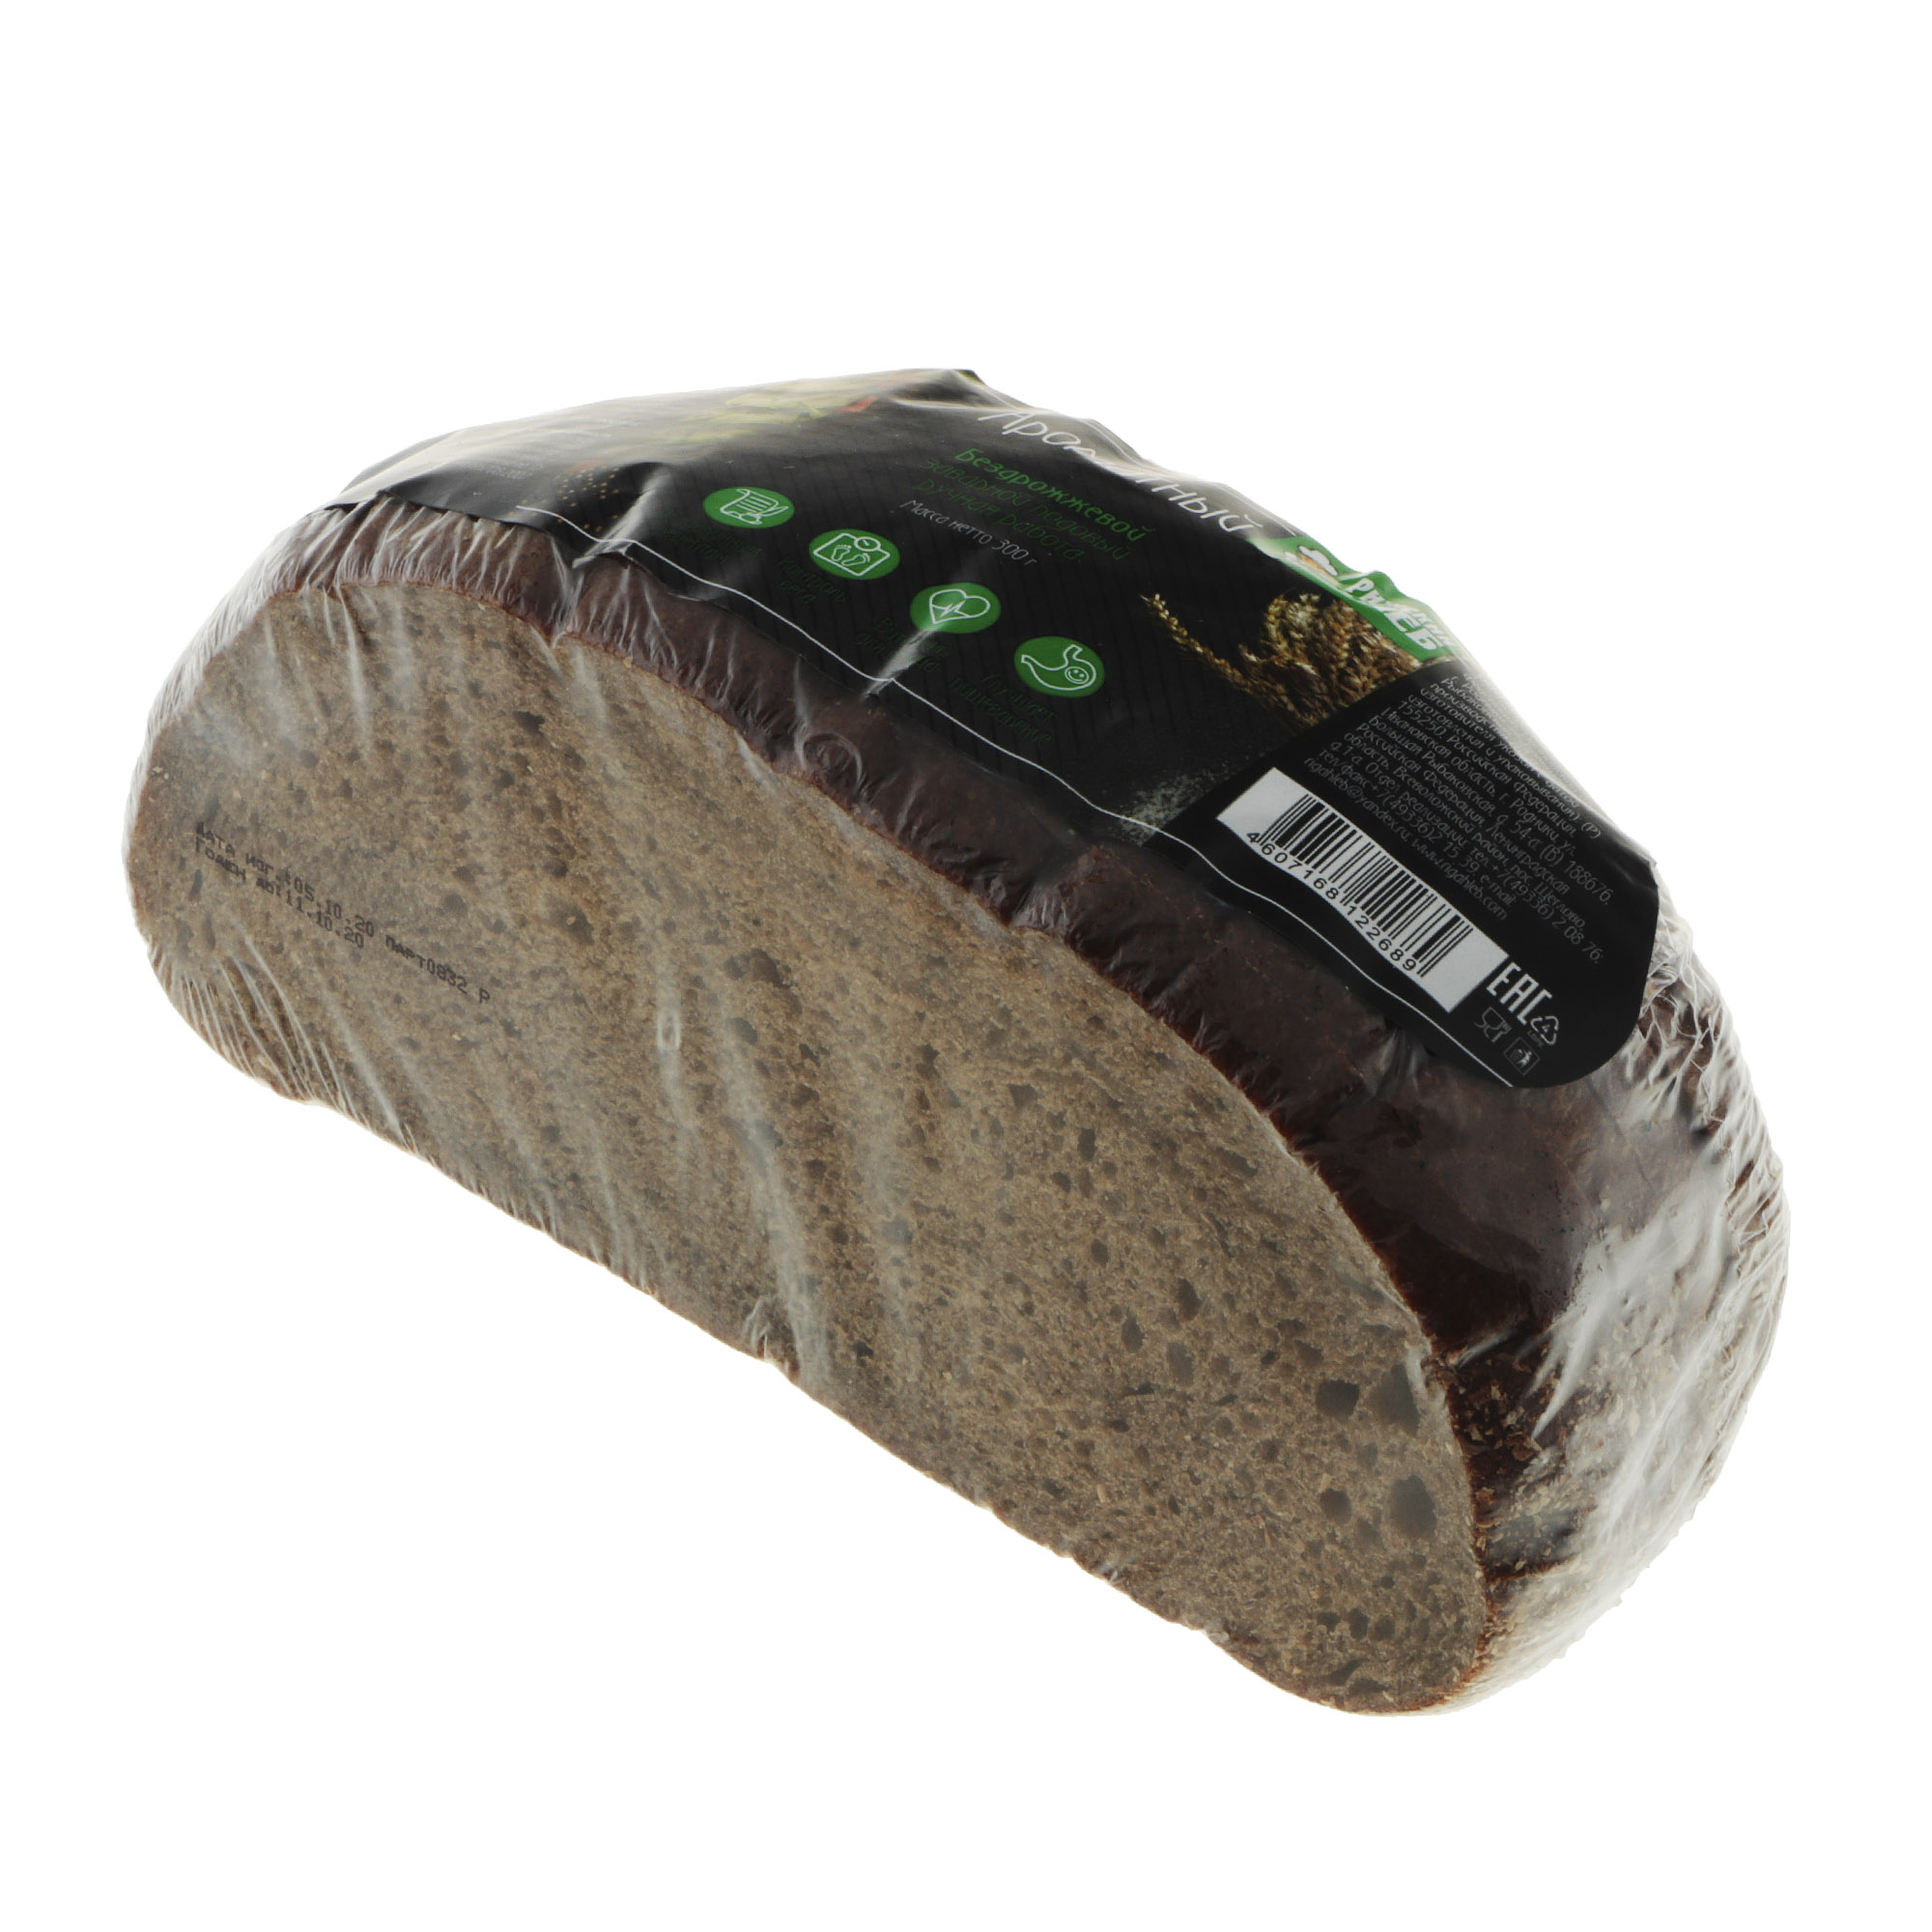 Хлеб Рижский хлеб ароматный 300 г хлеб рижский хлеб крестьянский 300 г